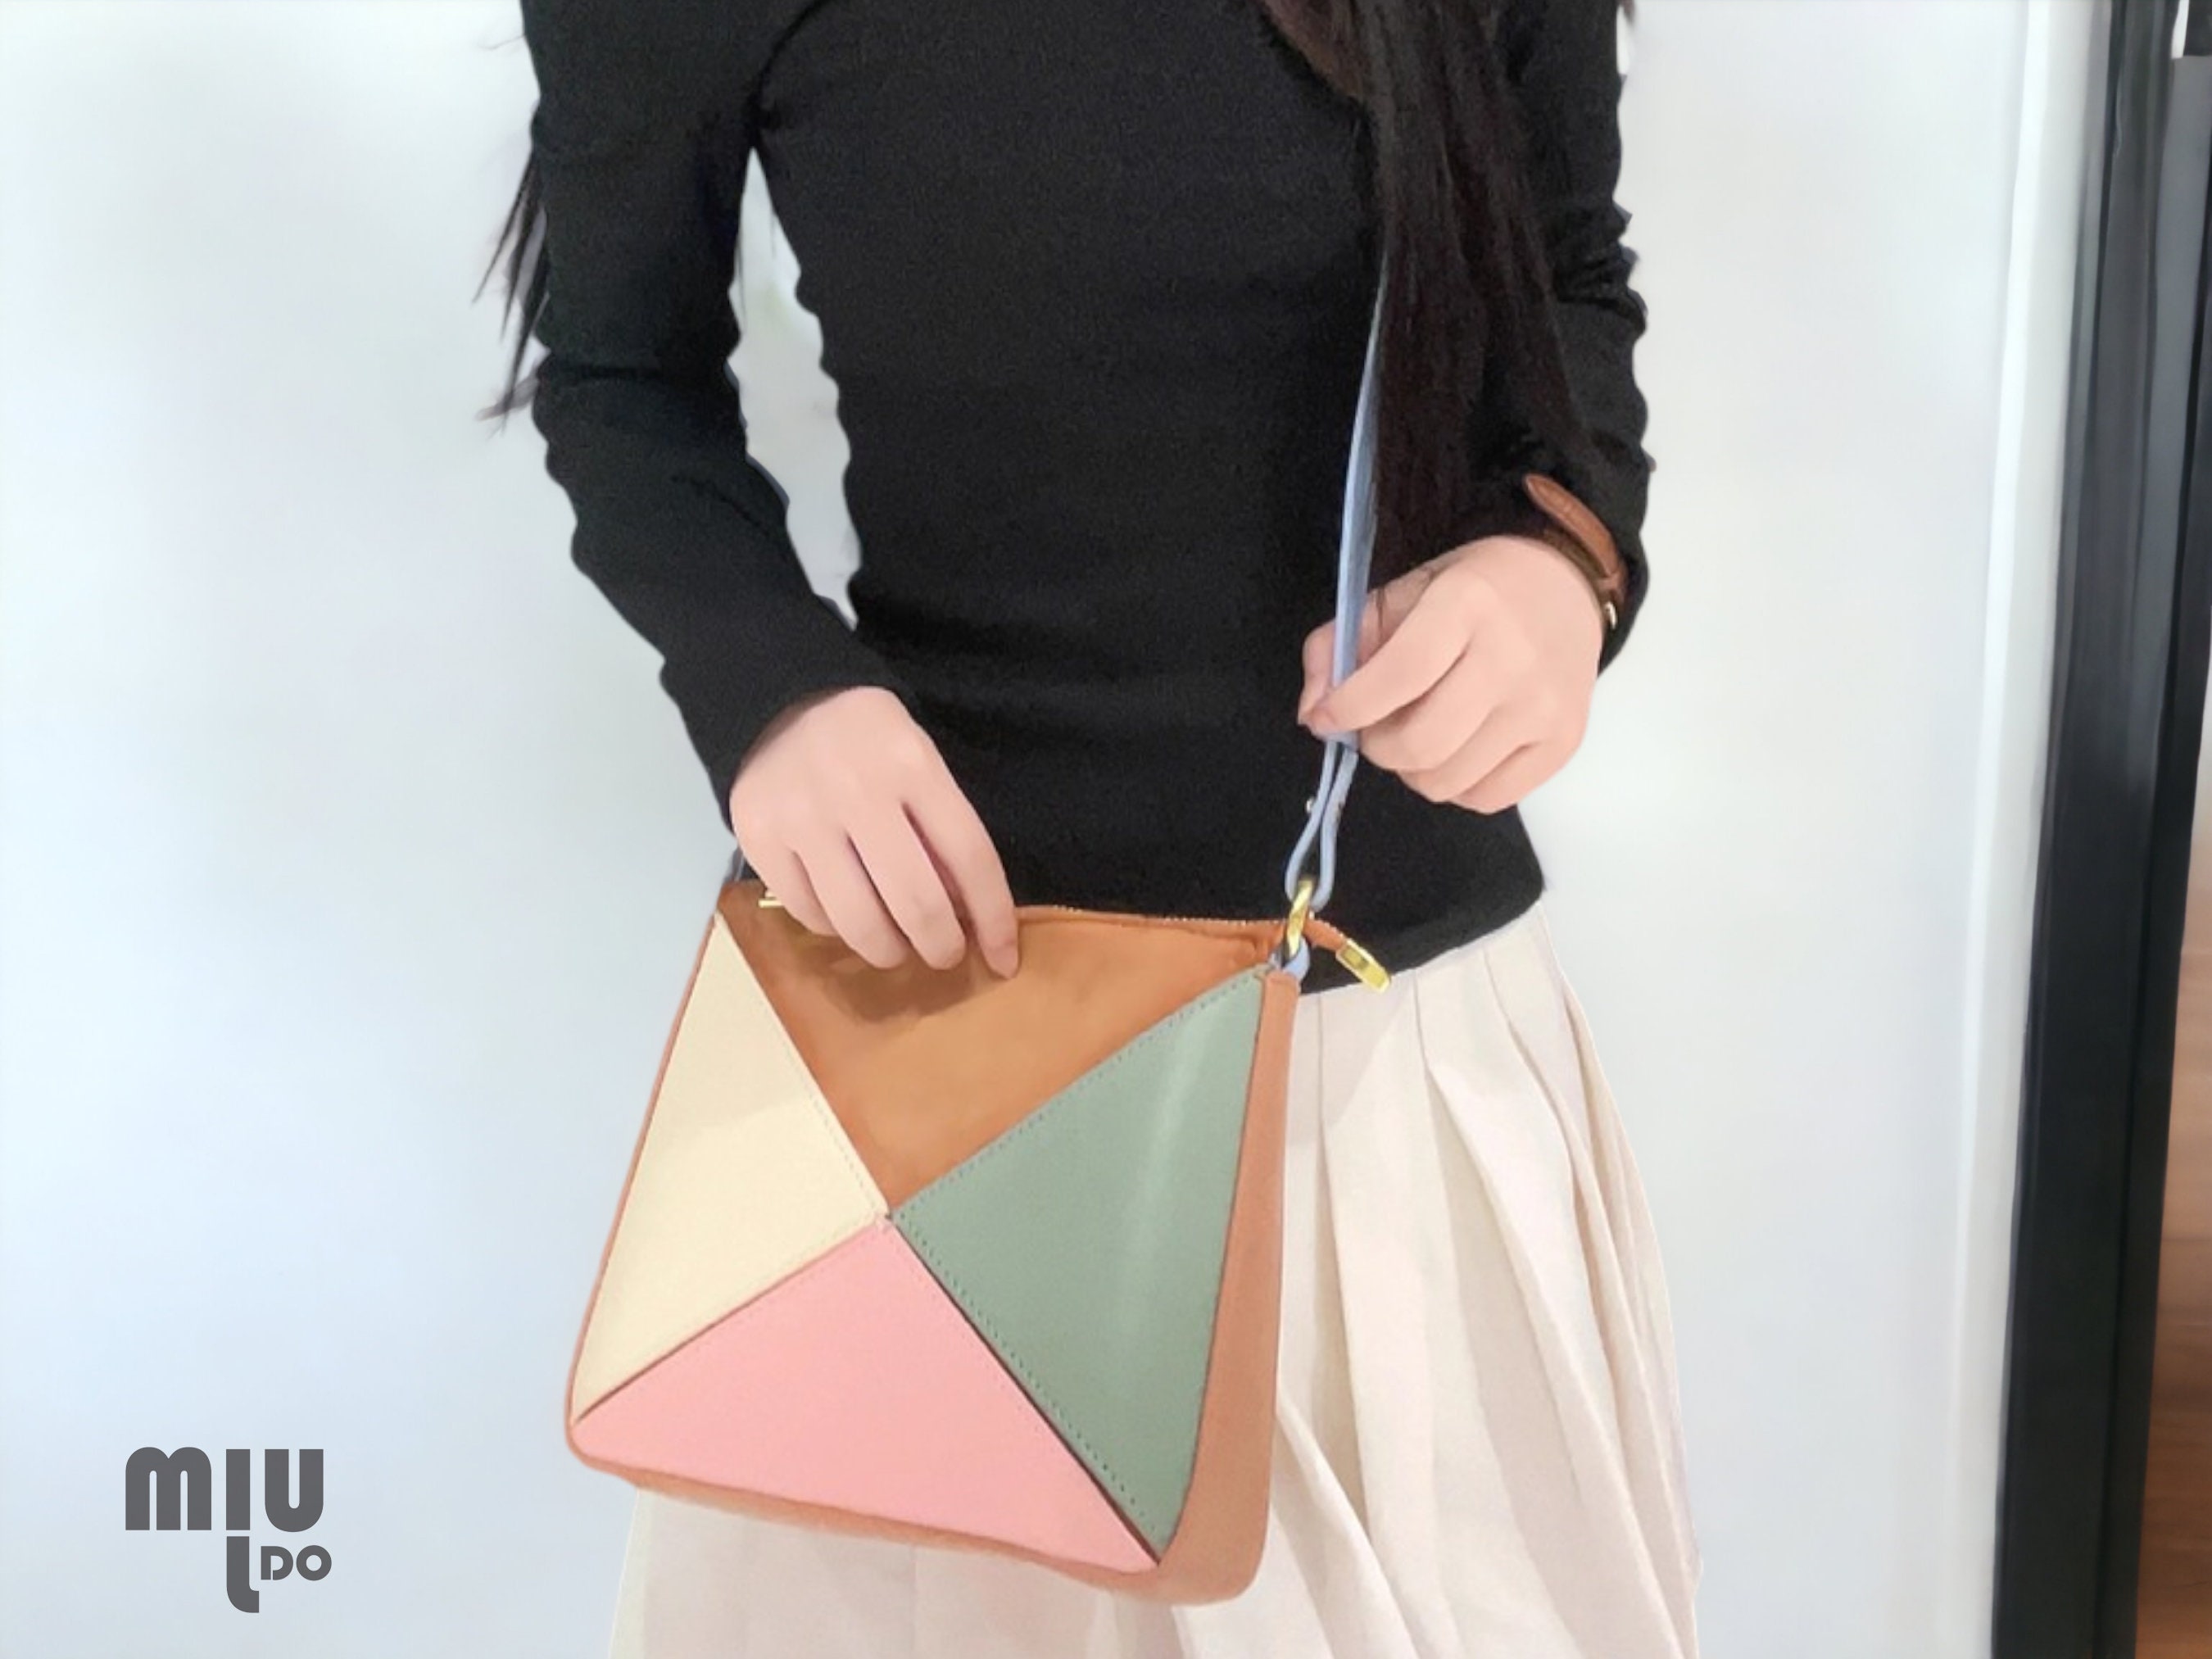 Women's Faux Suede Triangle Mini Bag